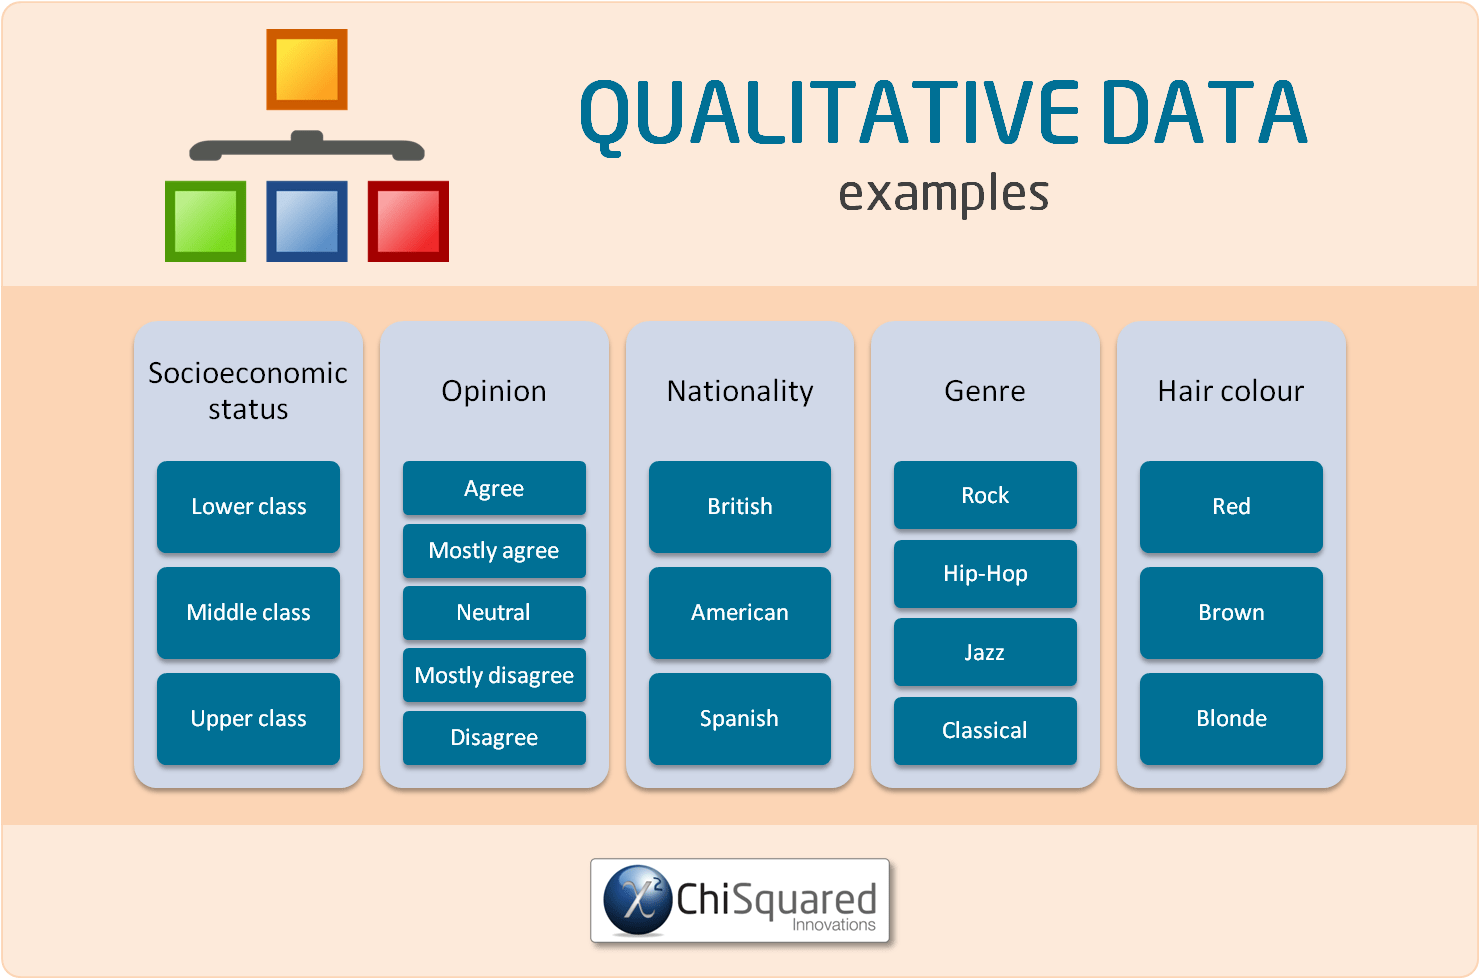 Examples of Qualitative Data